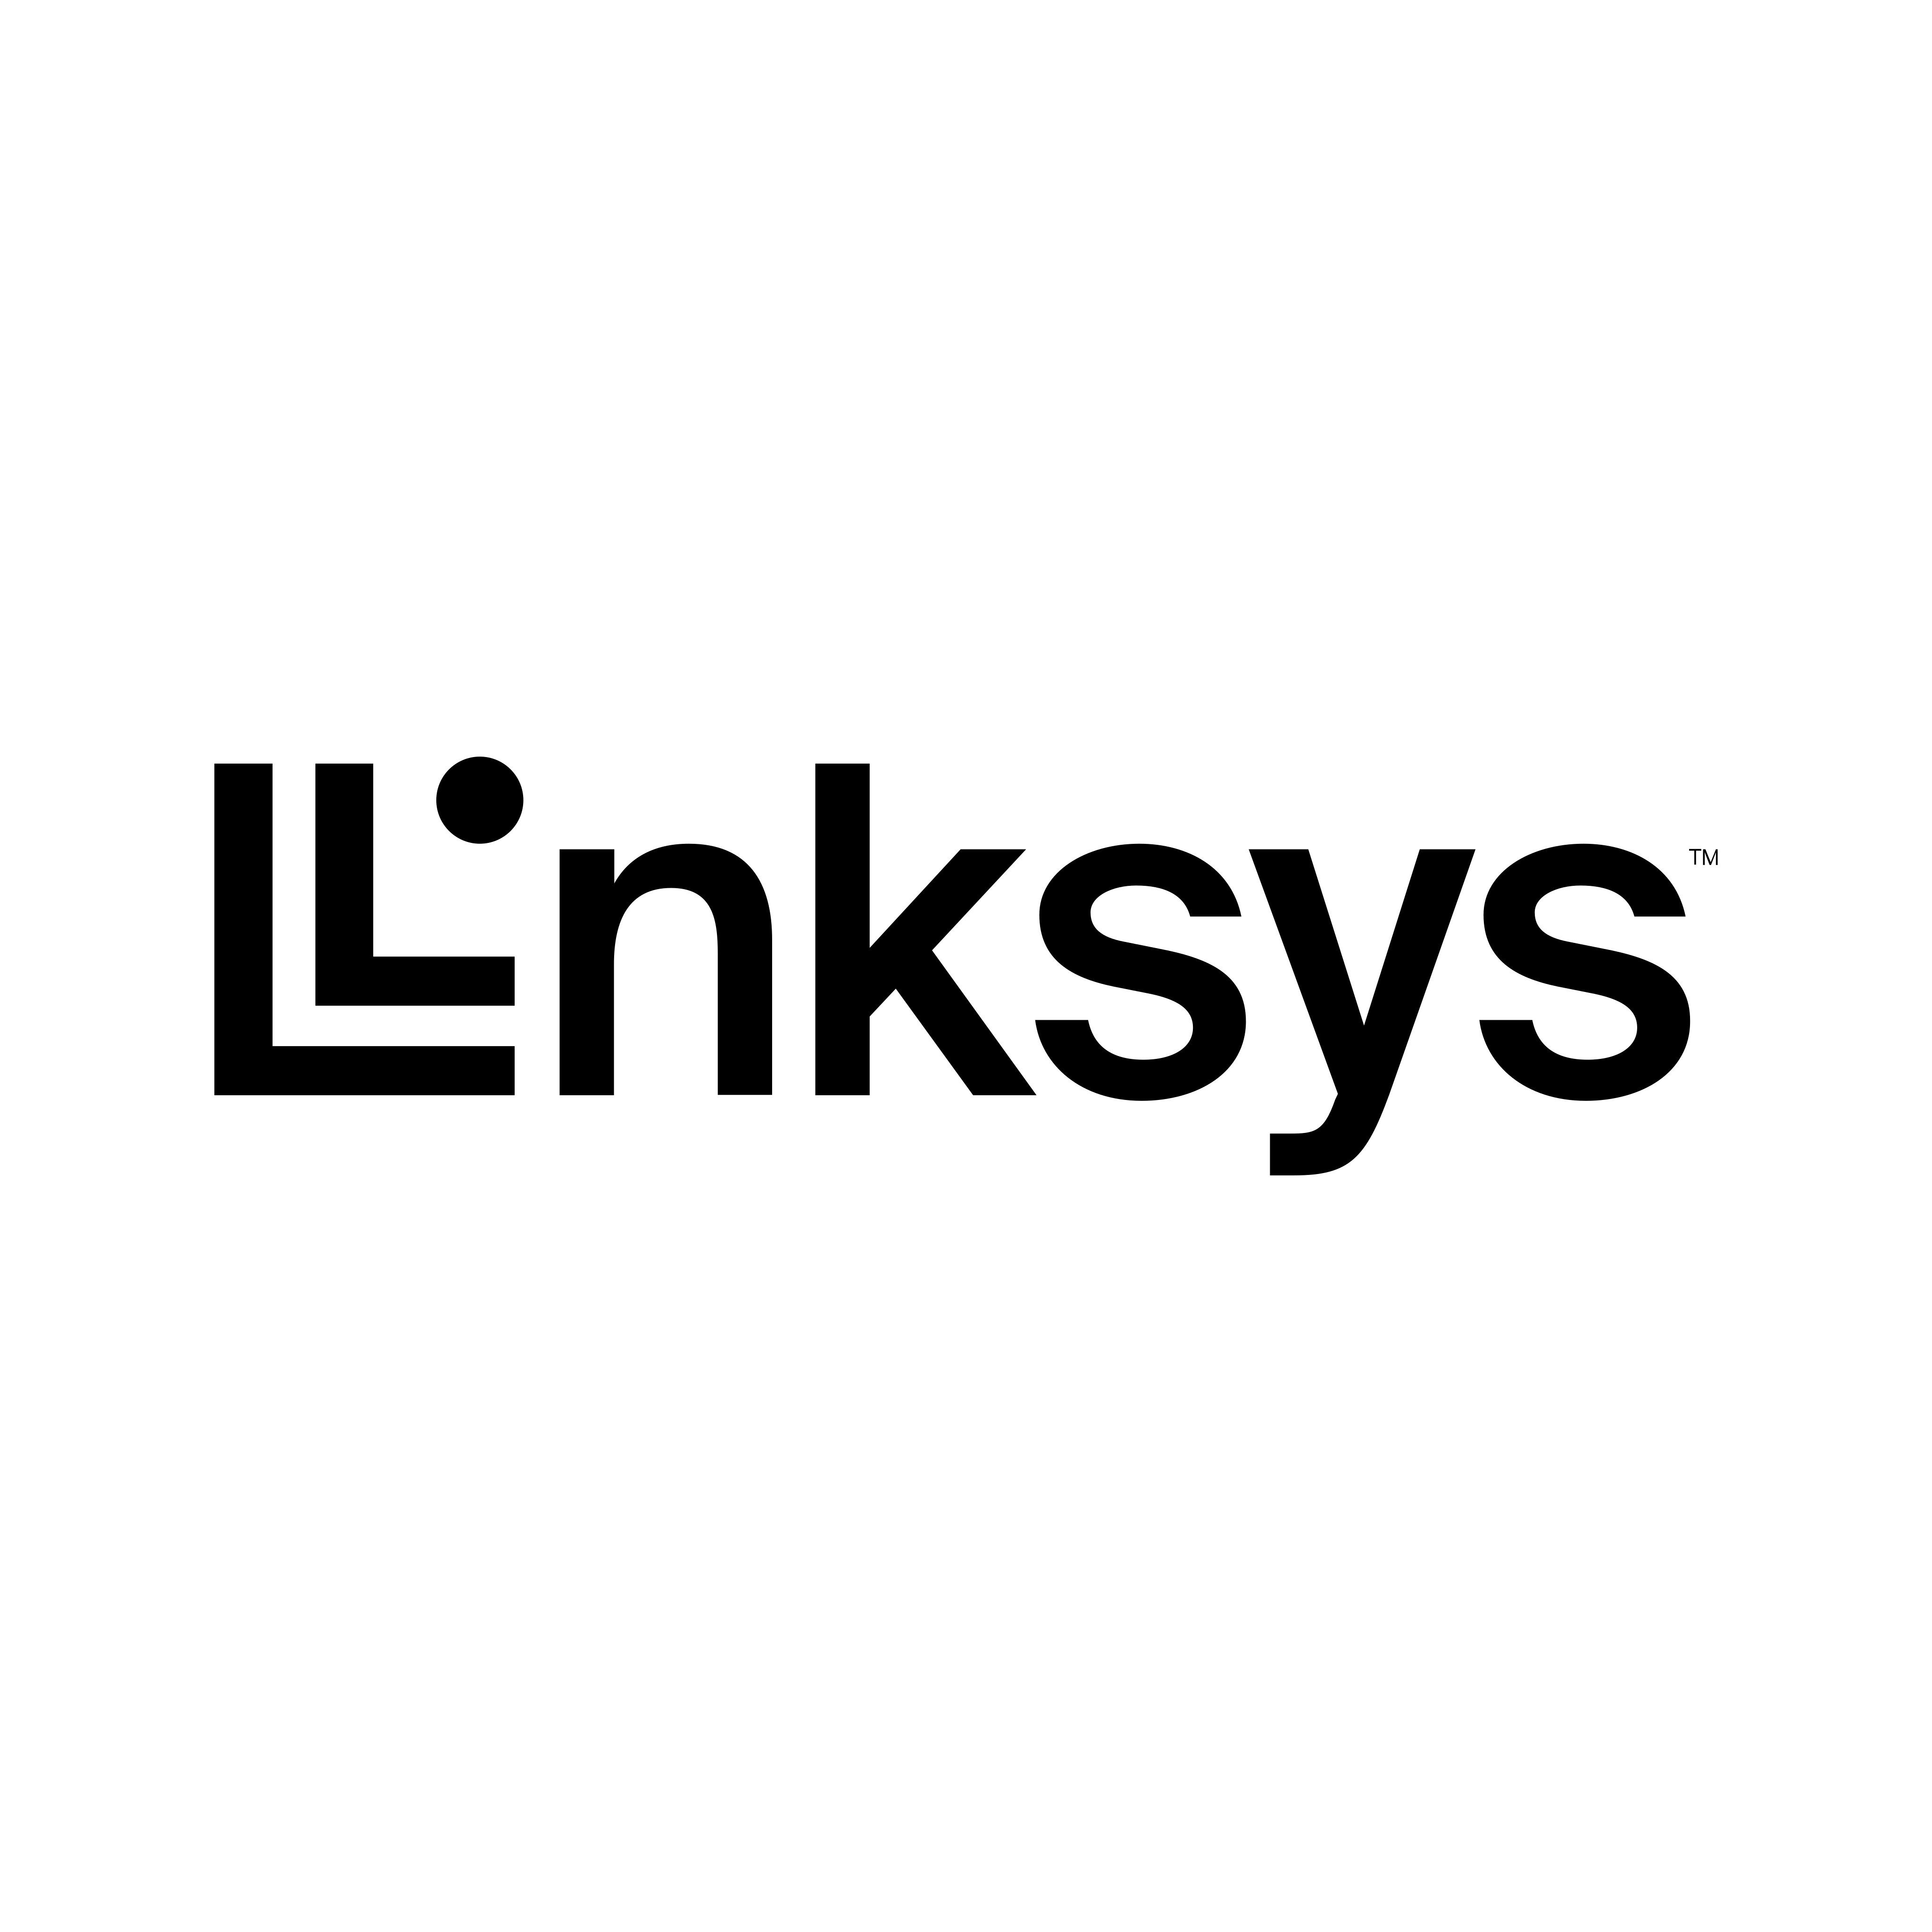 linksys logo 0 - Linksys Logo